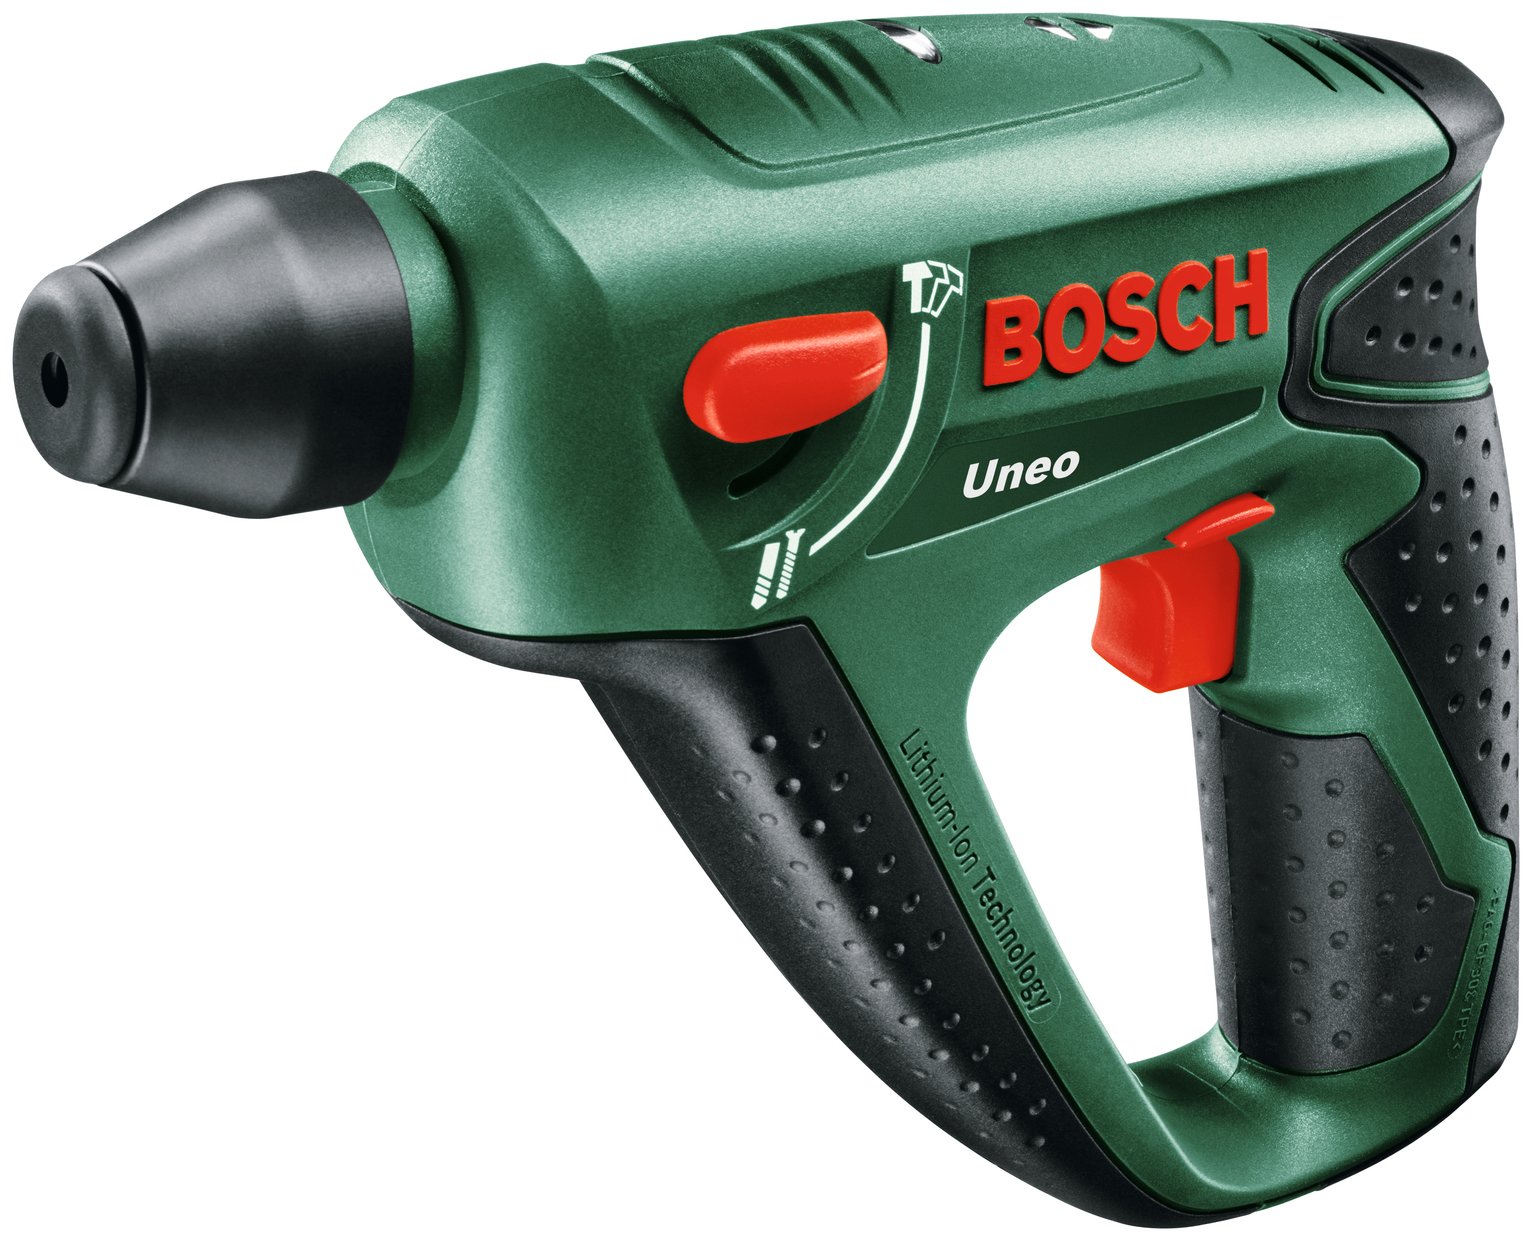 Bosch Uneo Cordless Drill – Bare Tool